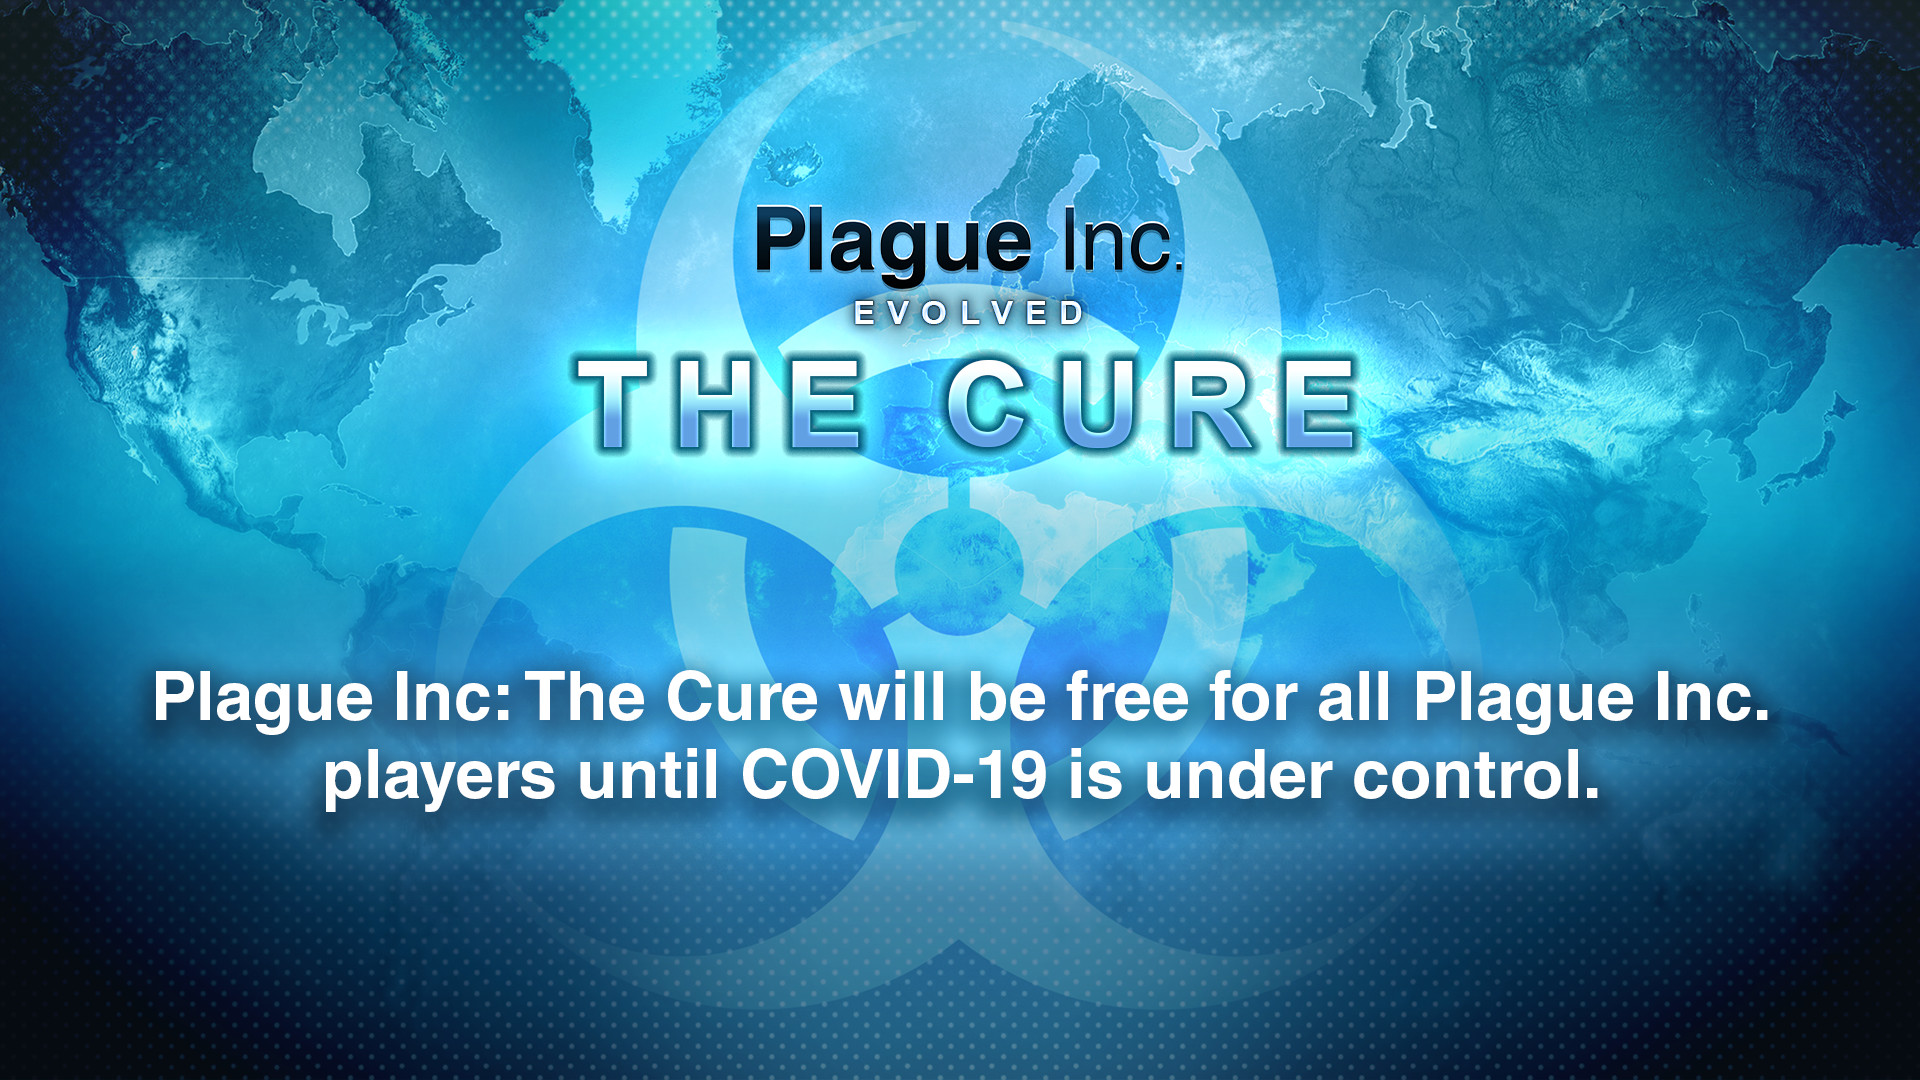 plague inc free download laptop